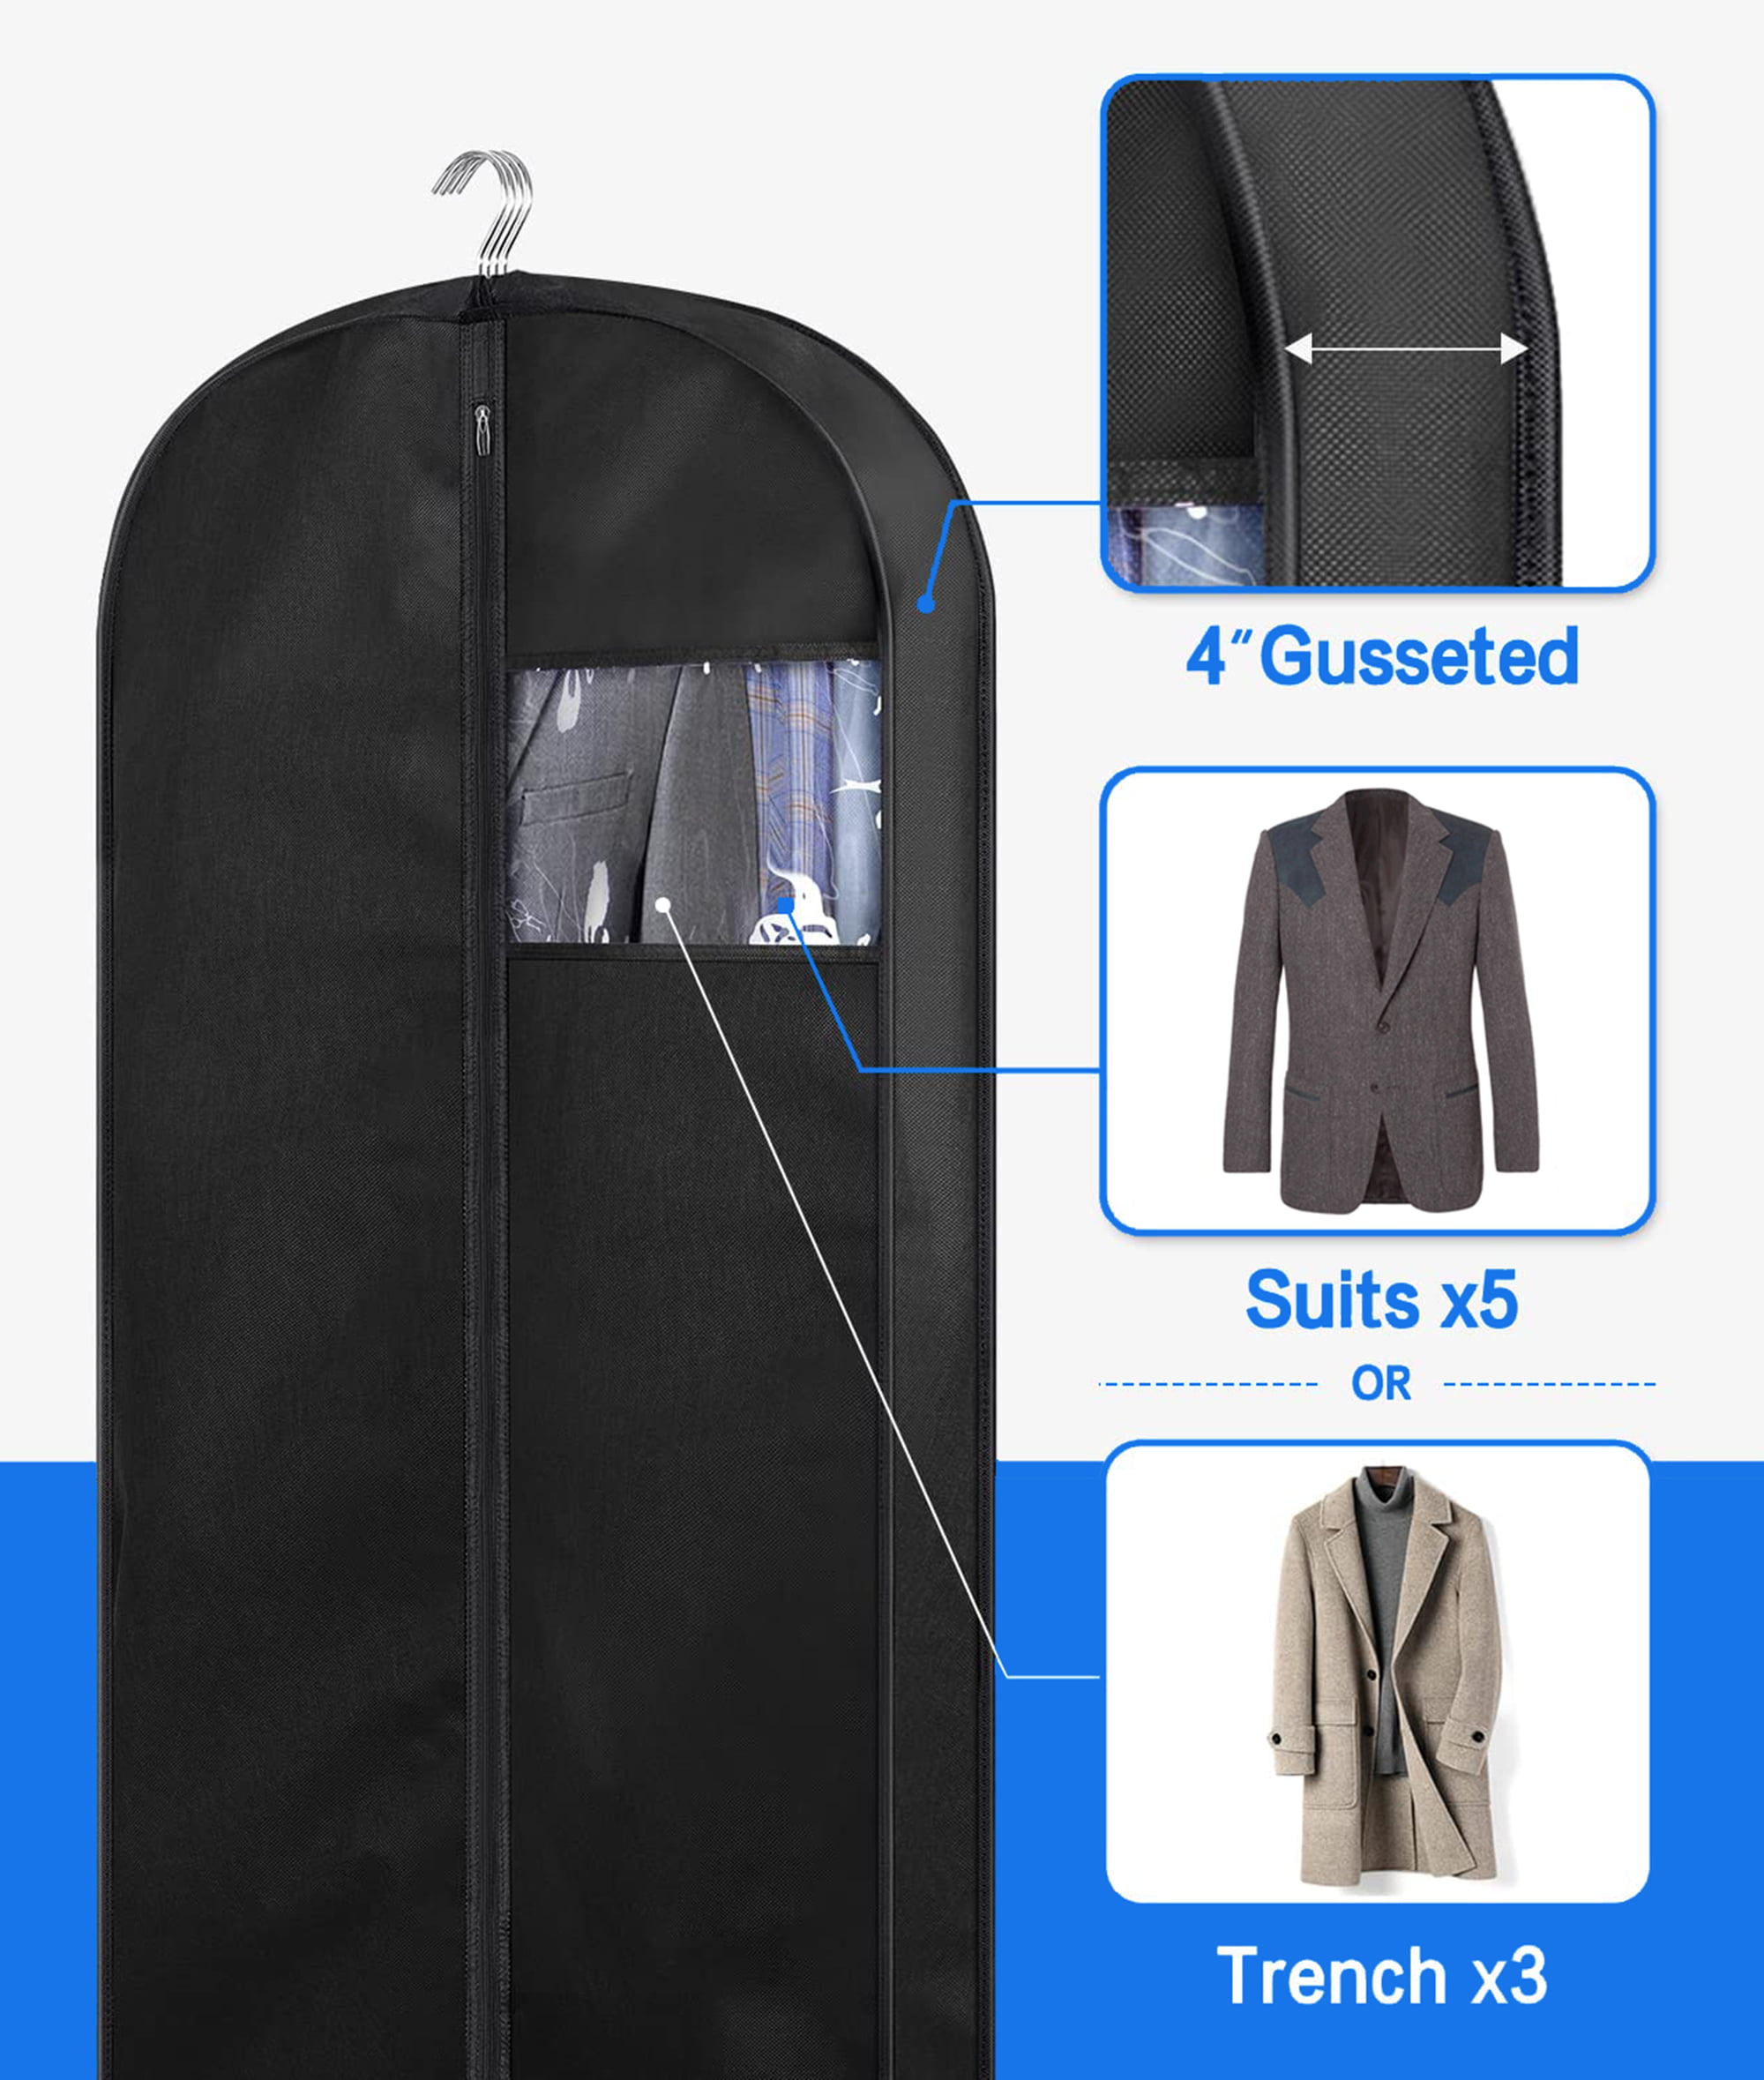 MISSLO 65 Long Garment Bags for Travel Dress Bags Wedding Dress